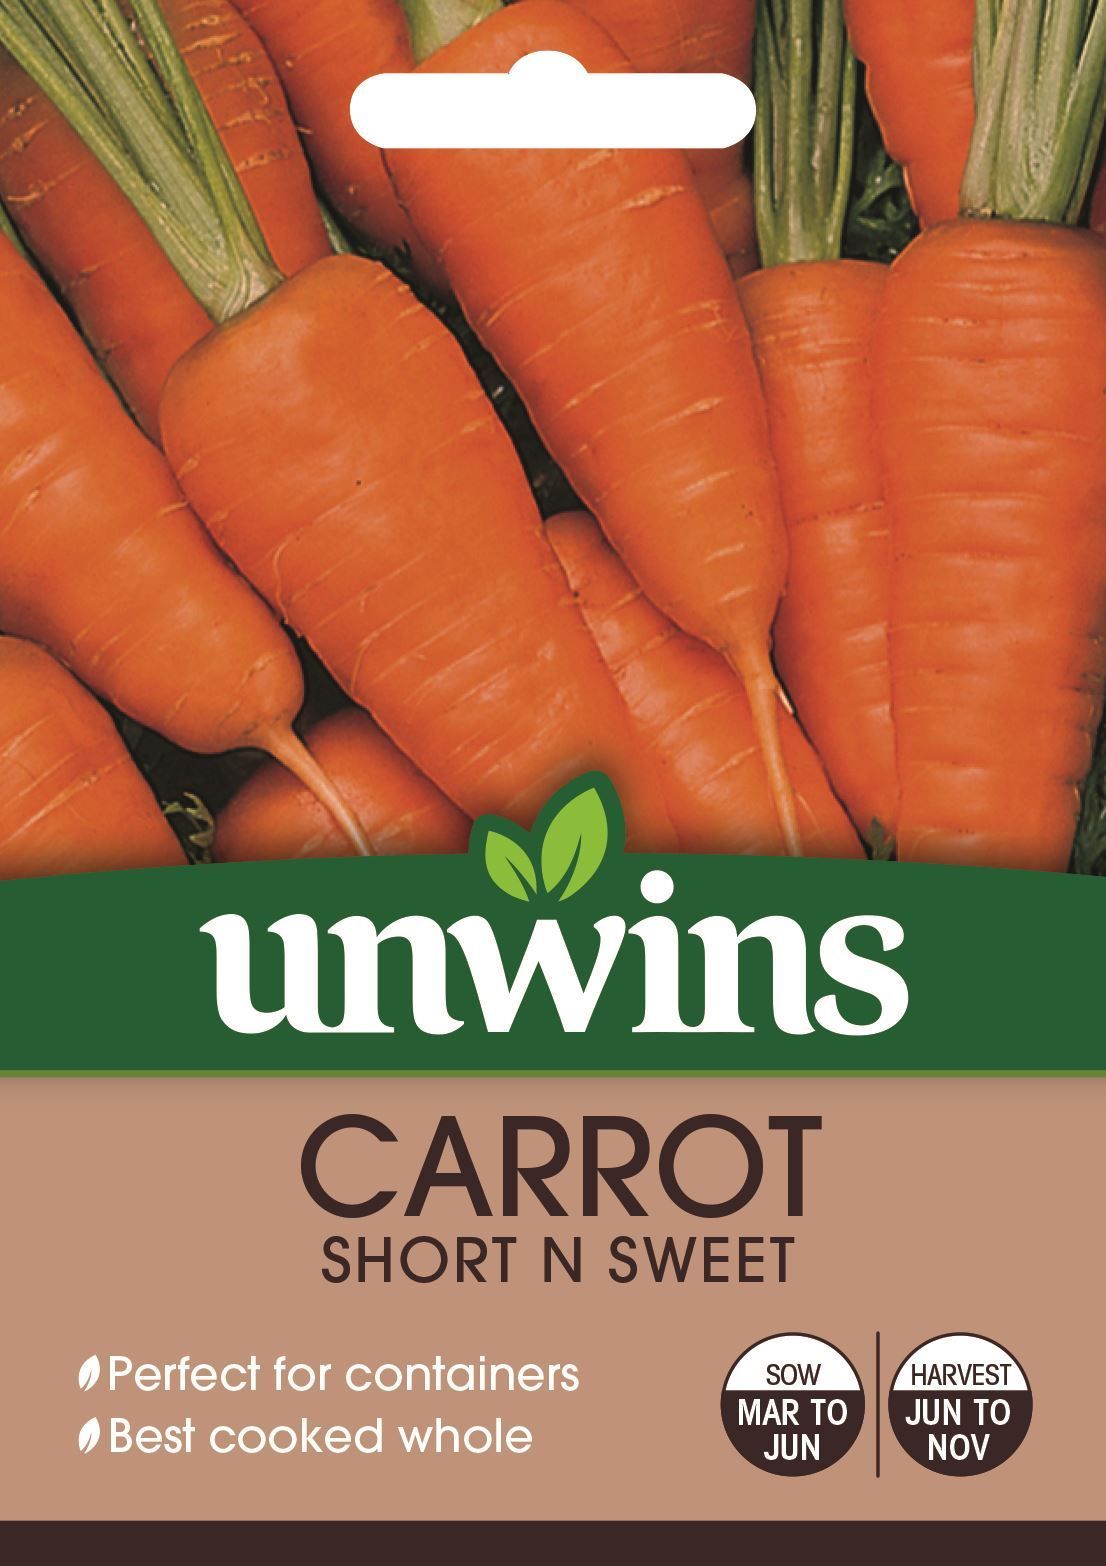 Unwins Carrot (Patio) Short N Sweet Seeds